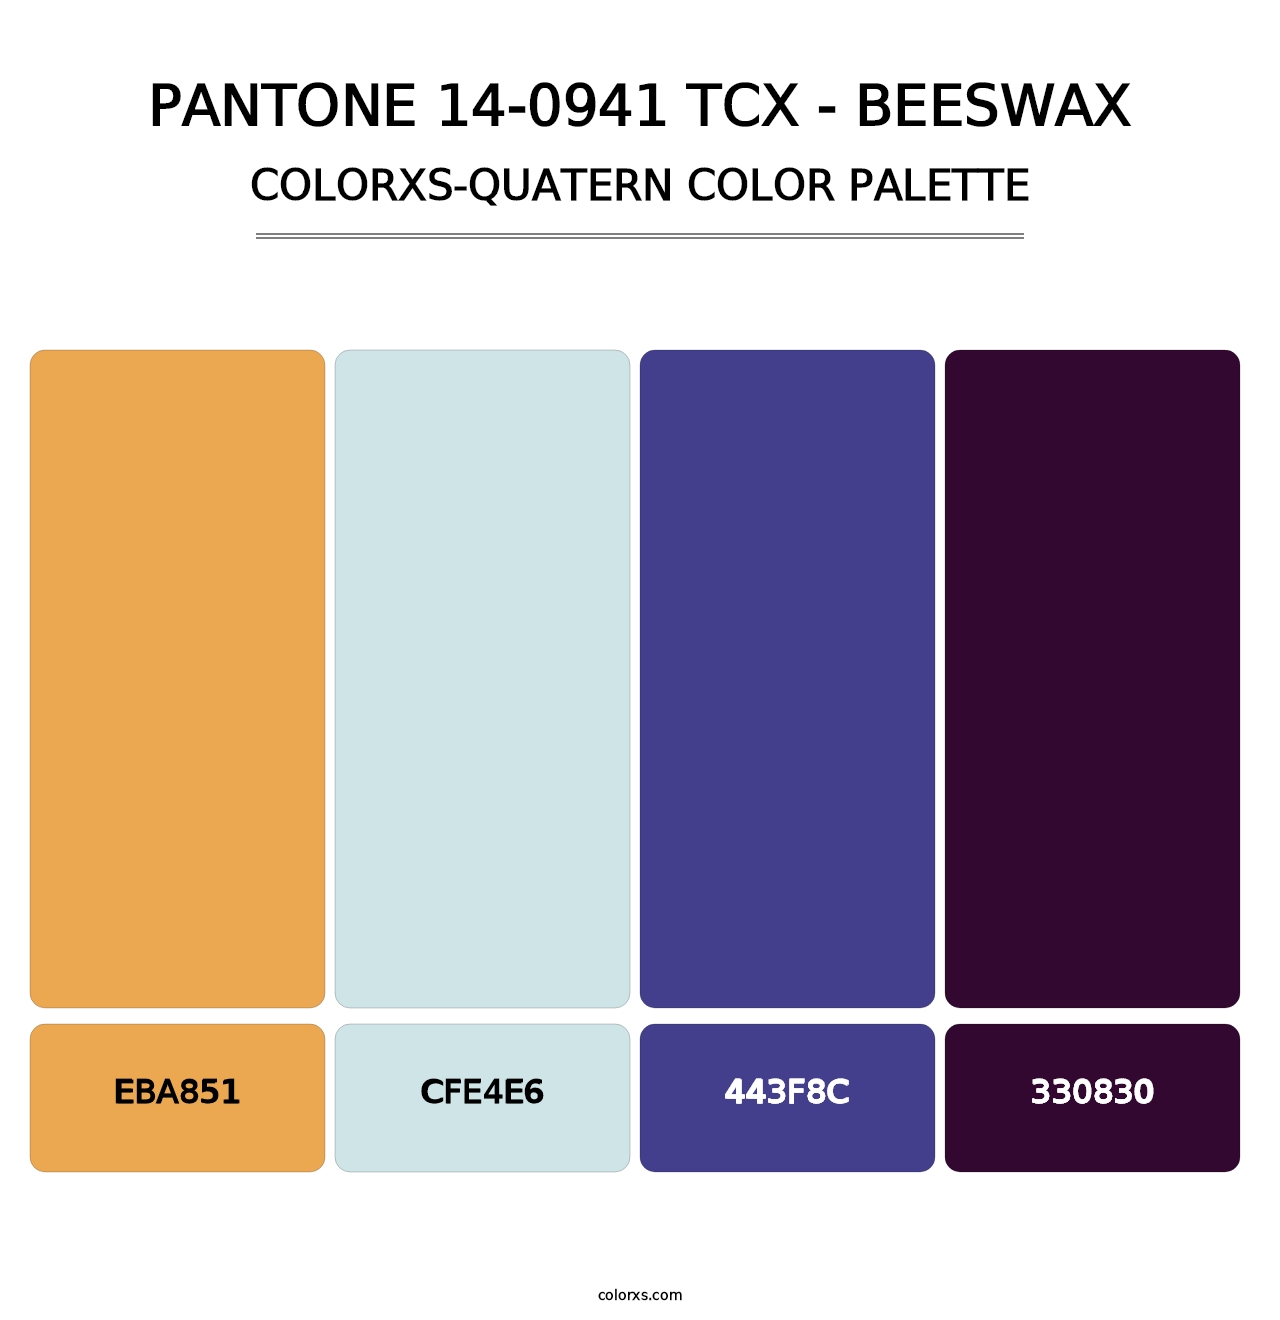 PANTONE 14-0941 TCX - Beeswax - Colorxs Quatern Palette